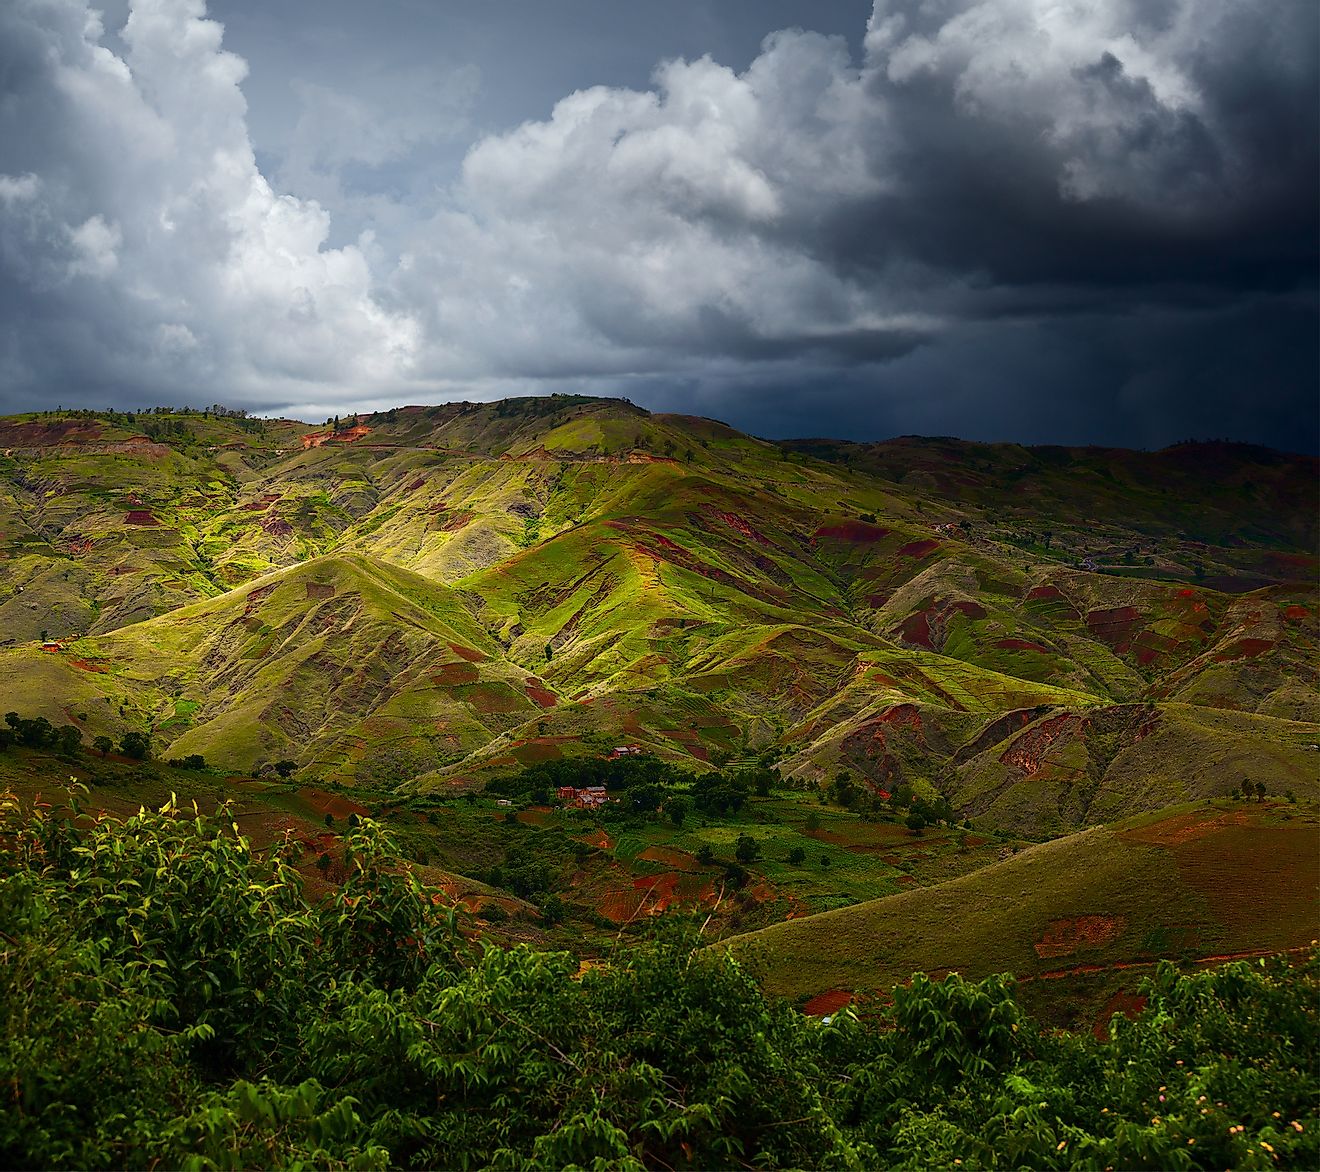 Rain clouds gather over Madagascar's mountains. Image credit: Dudarev Mikhail/Shutterstock.com